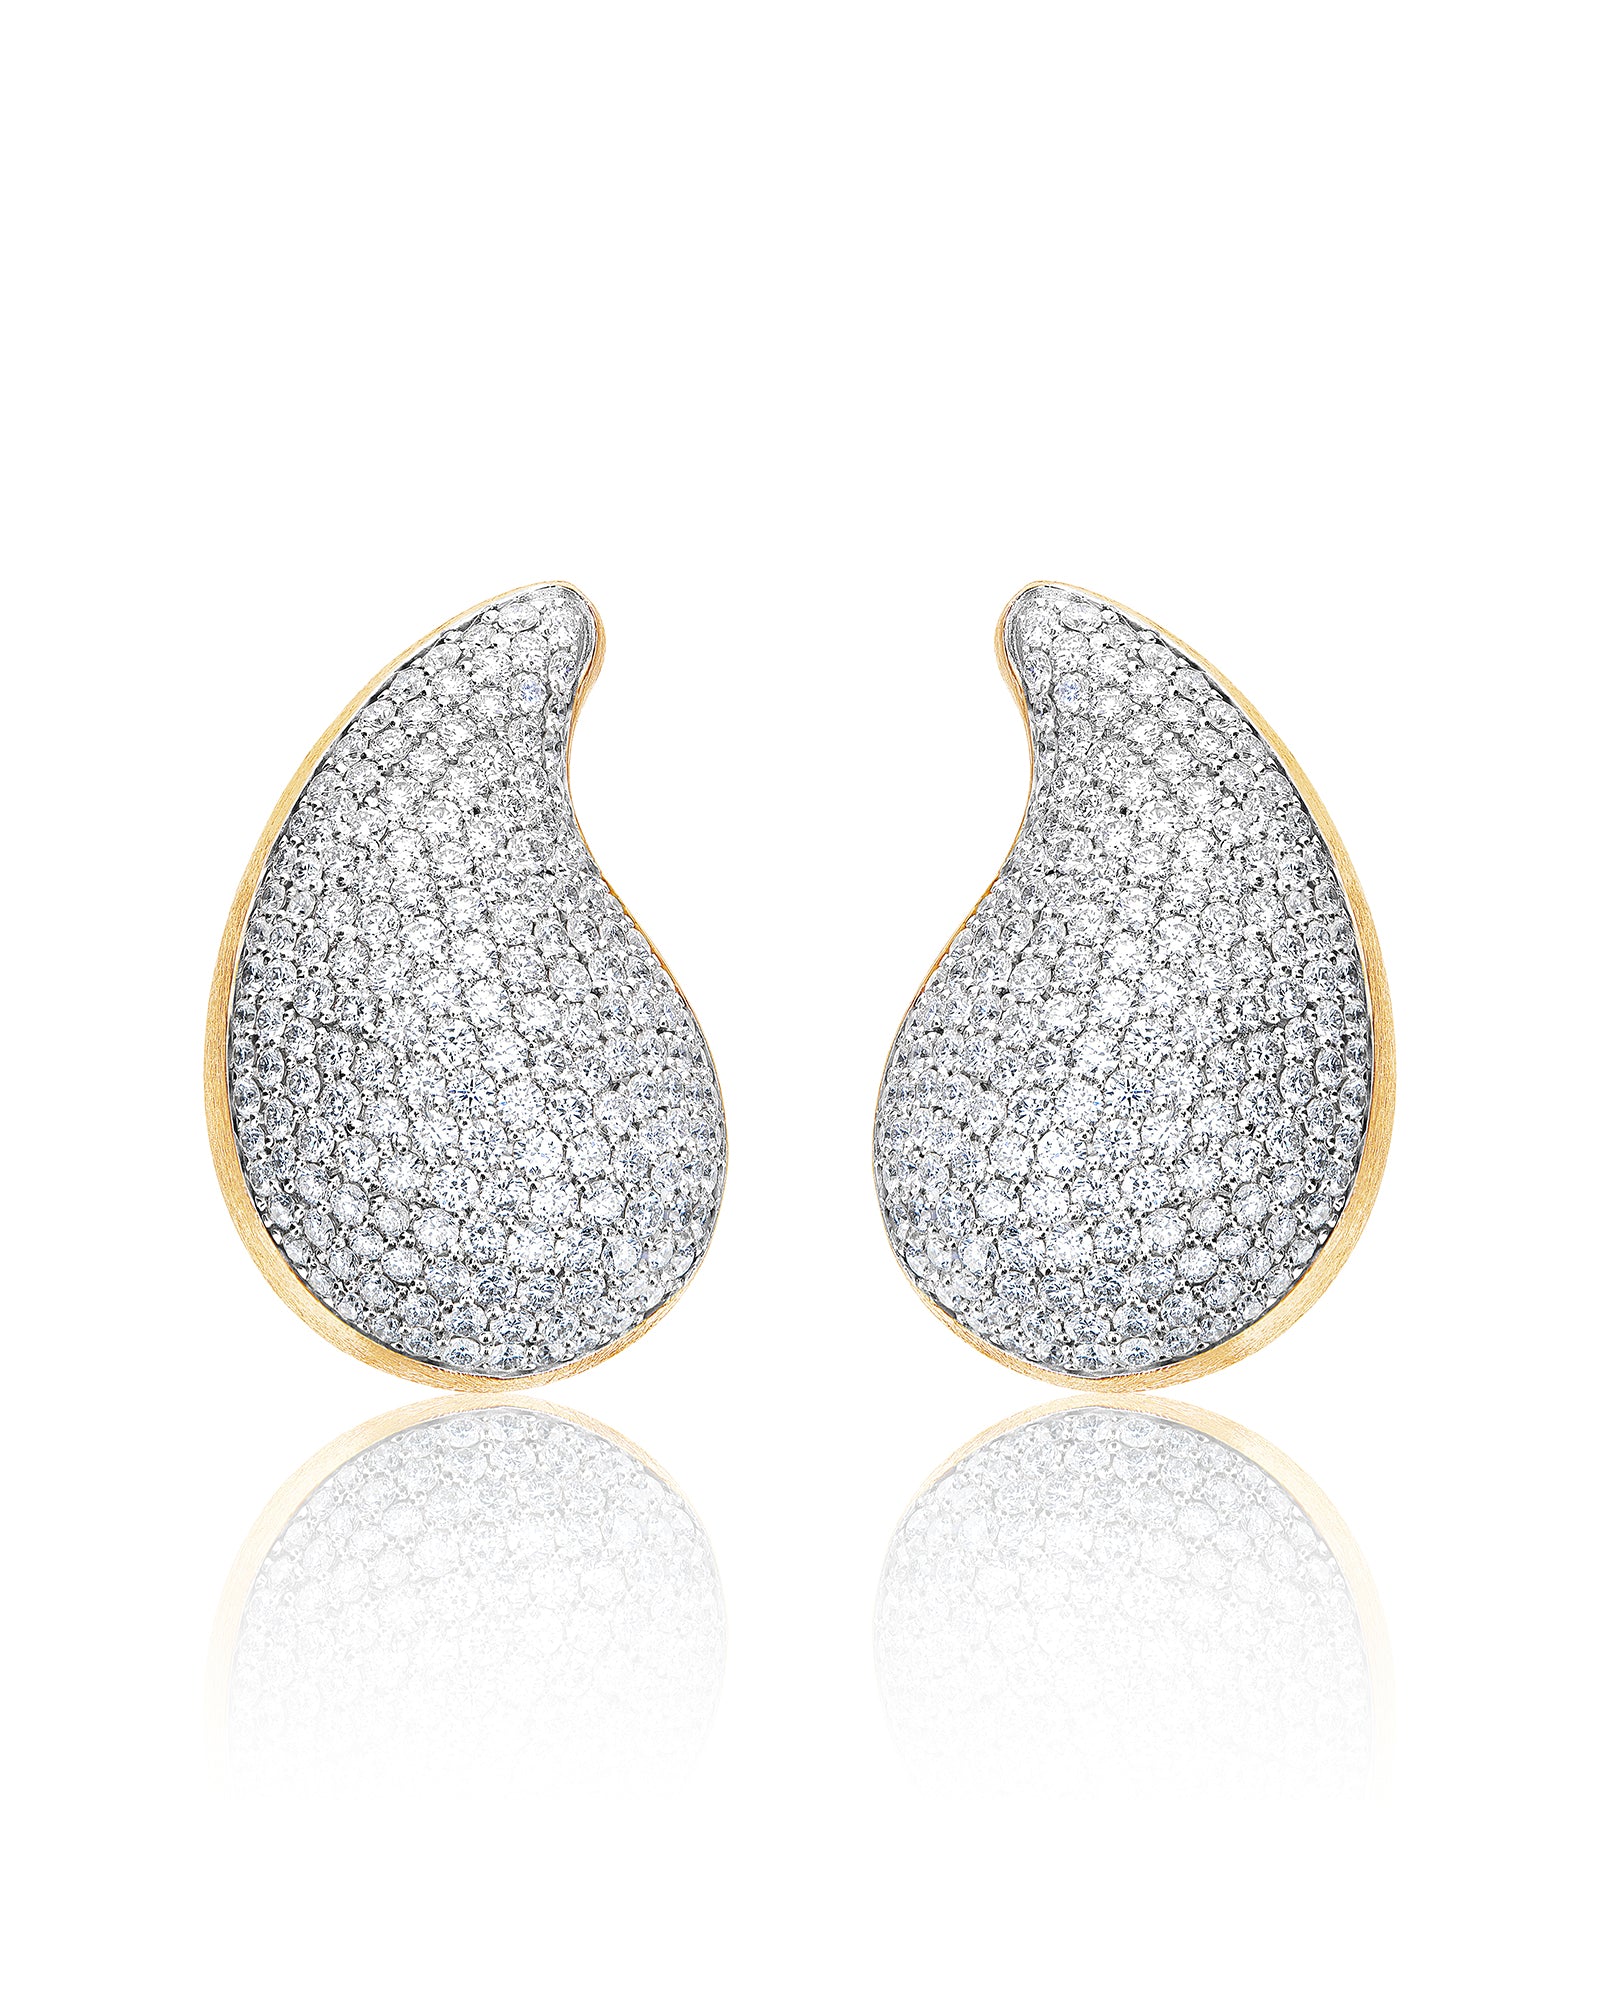 "Trasformista" Gold, Cachemire and Diamonds Earrings